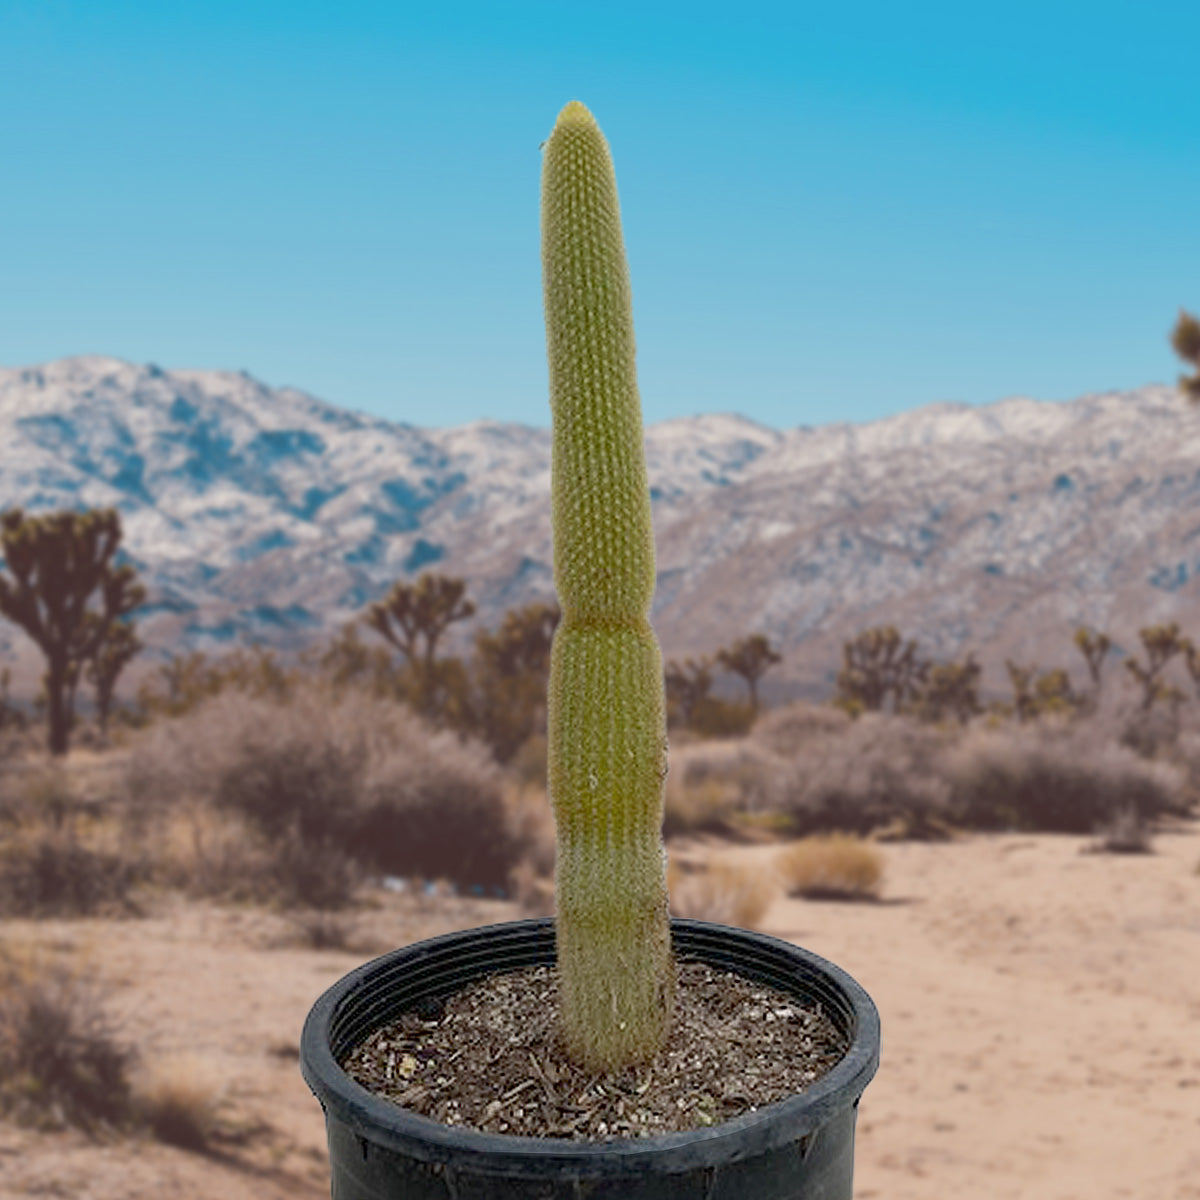 Golden Torch Cactus